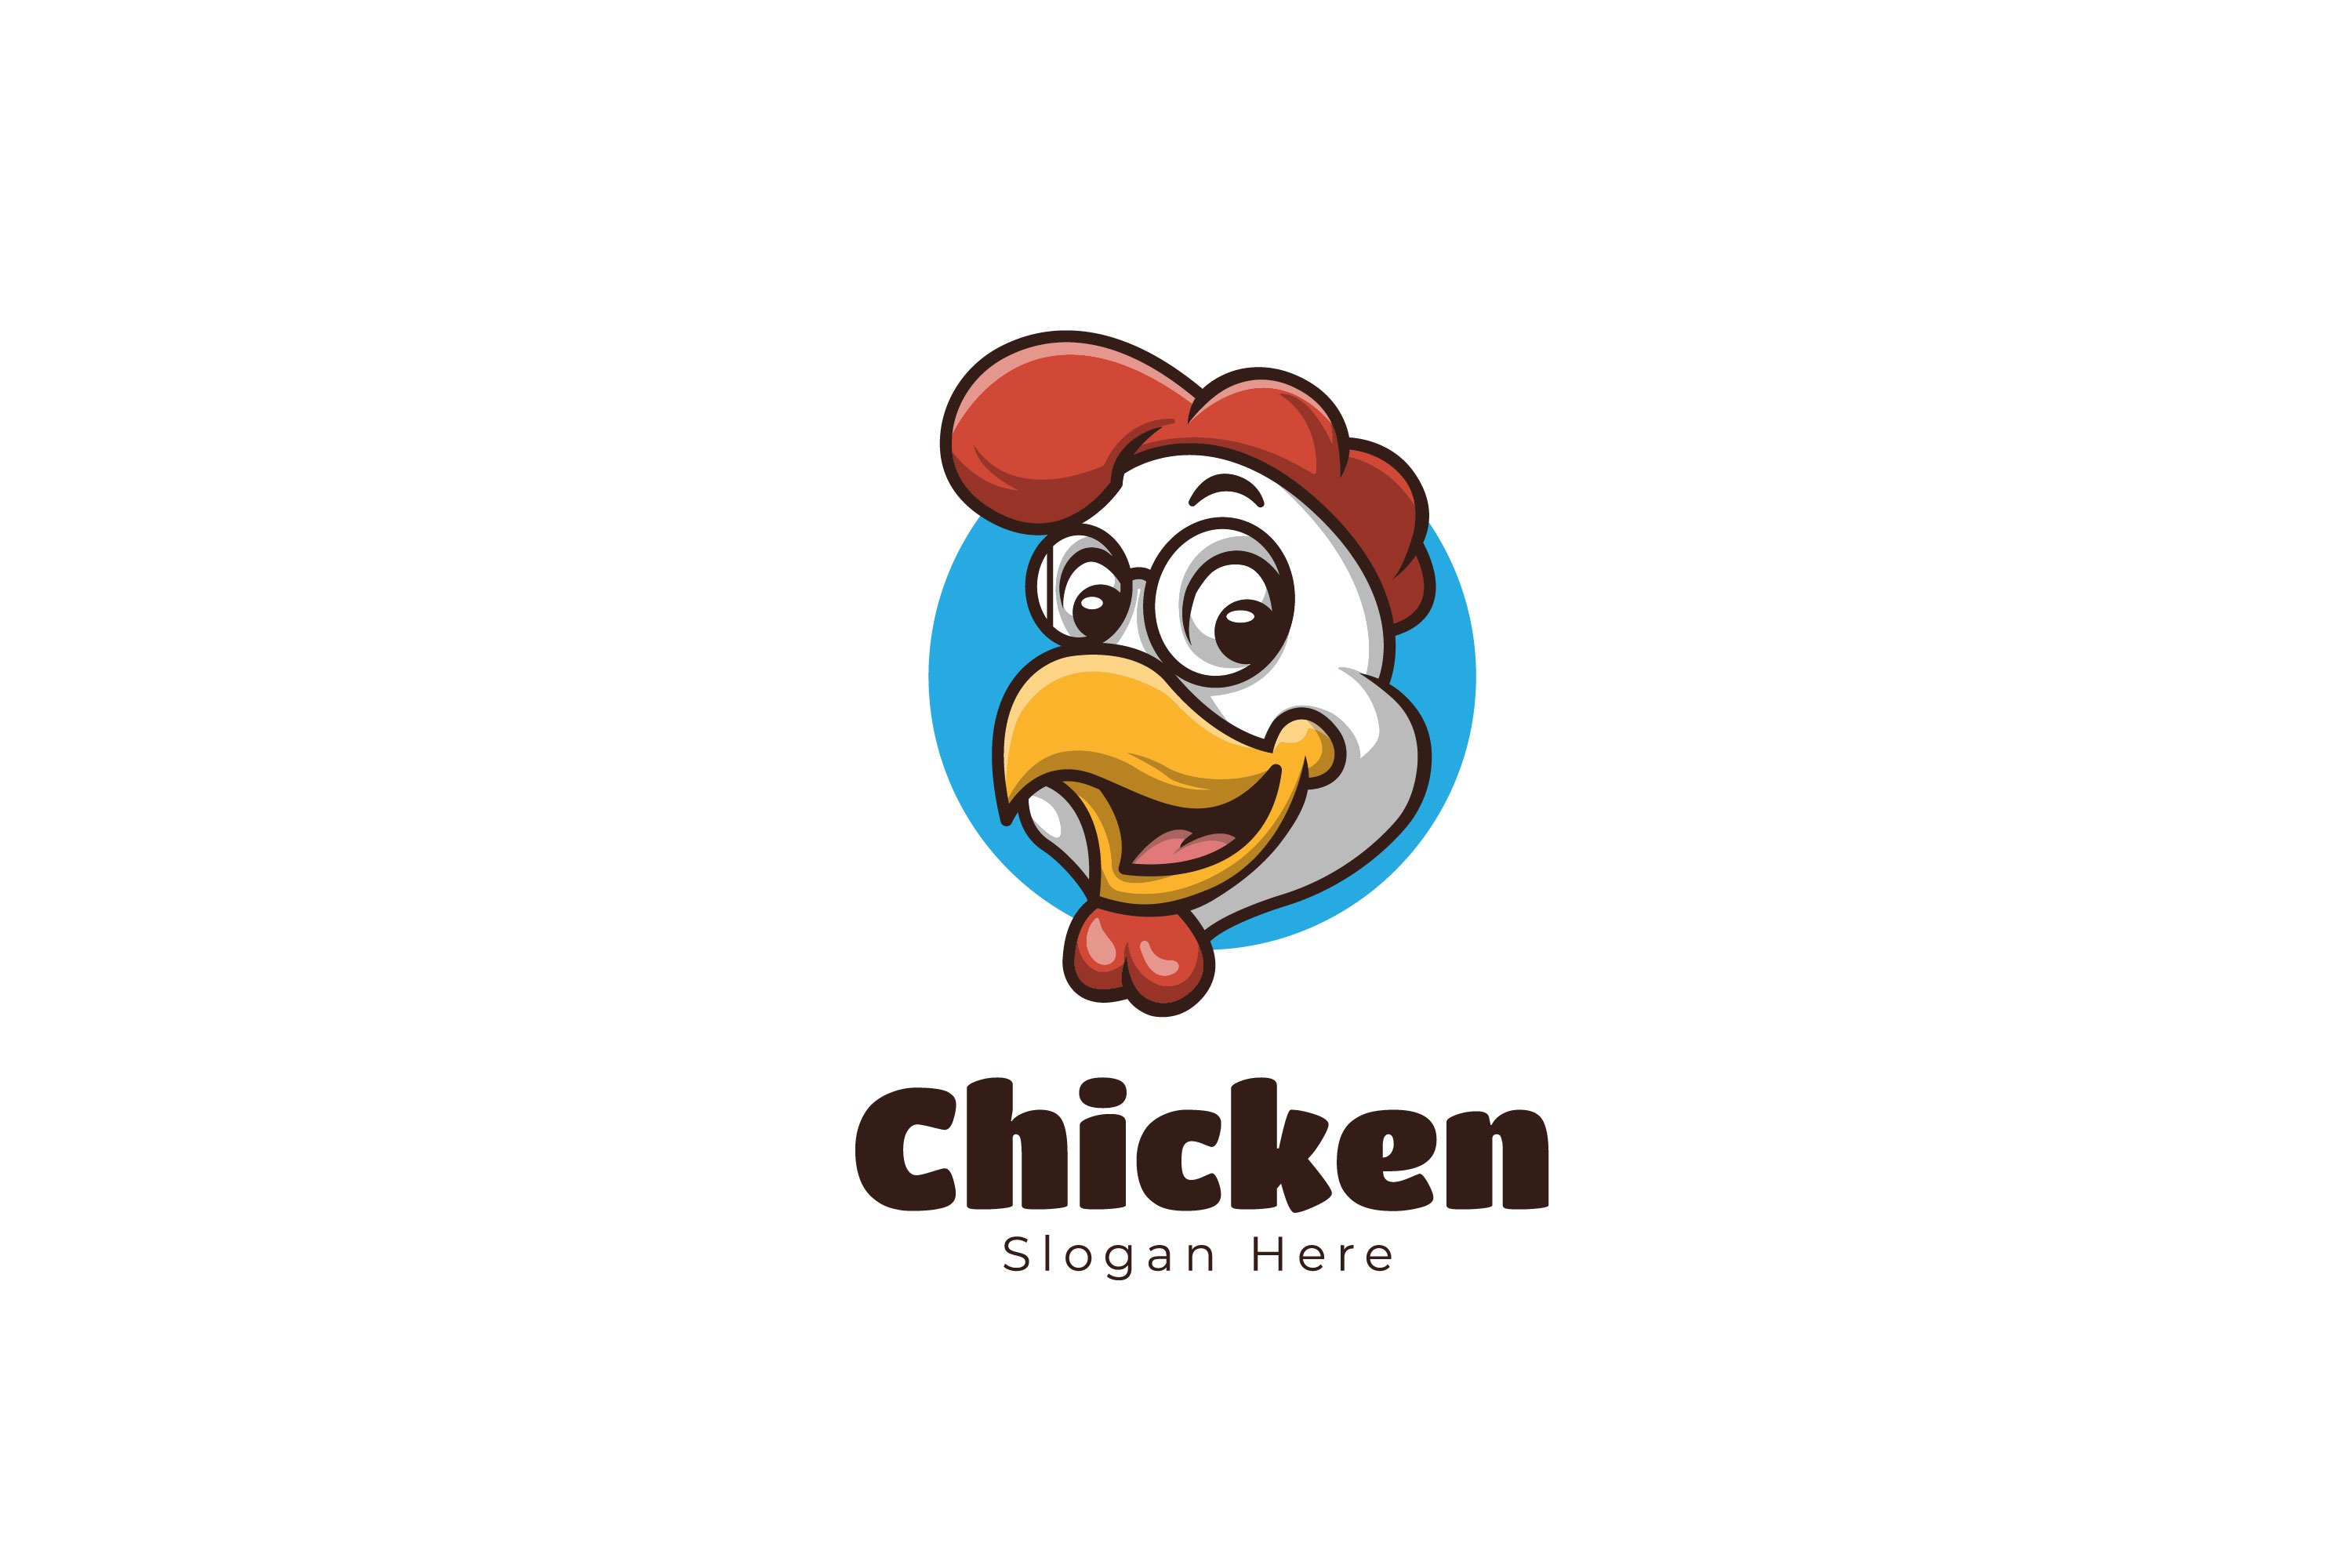 Chicken Cartoon Logo cover image.